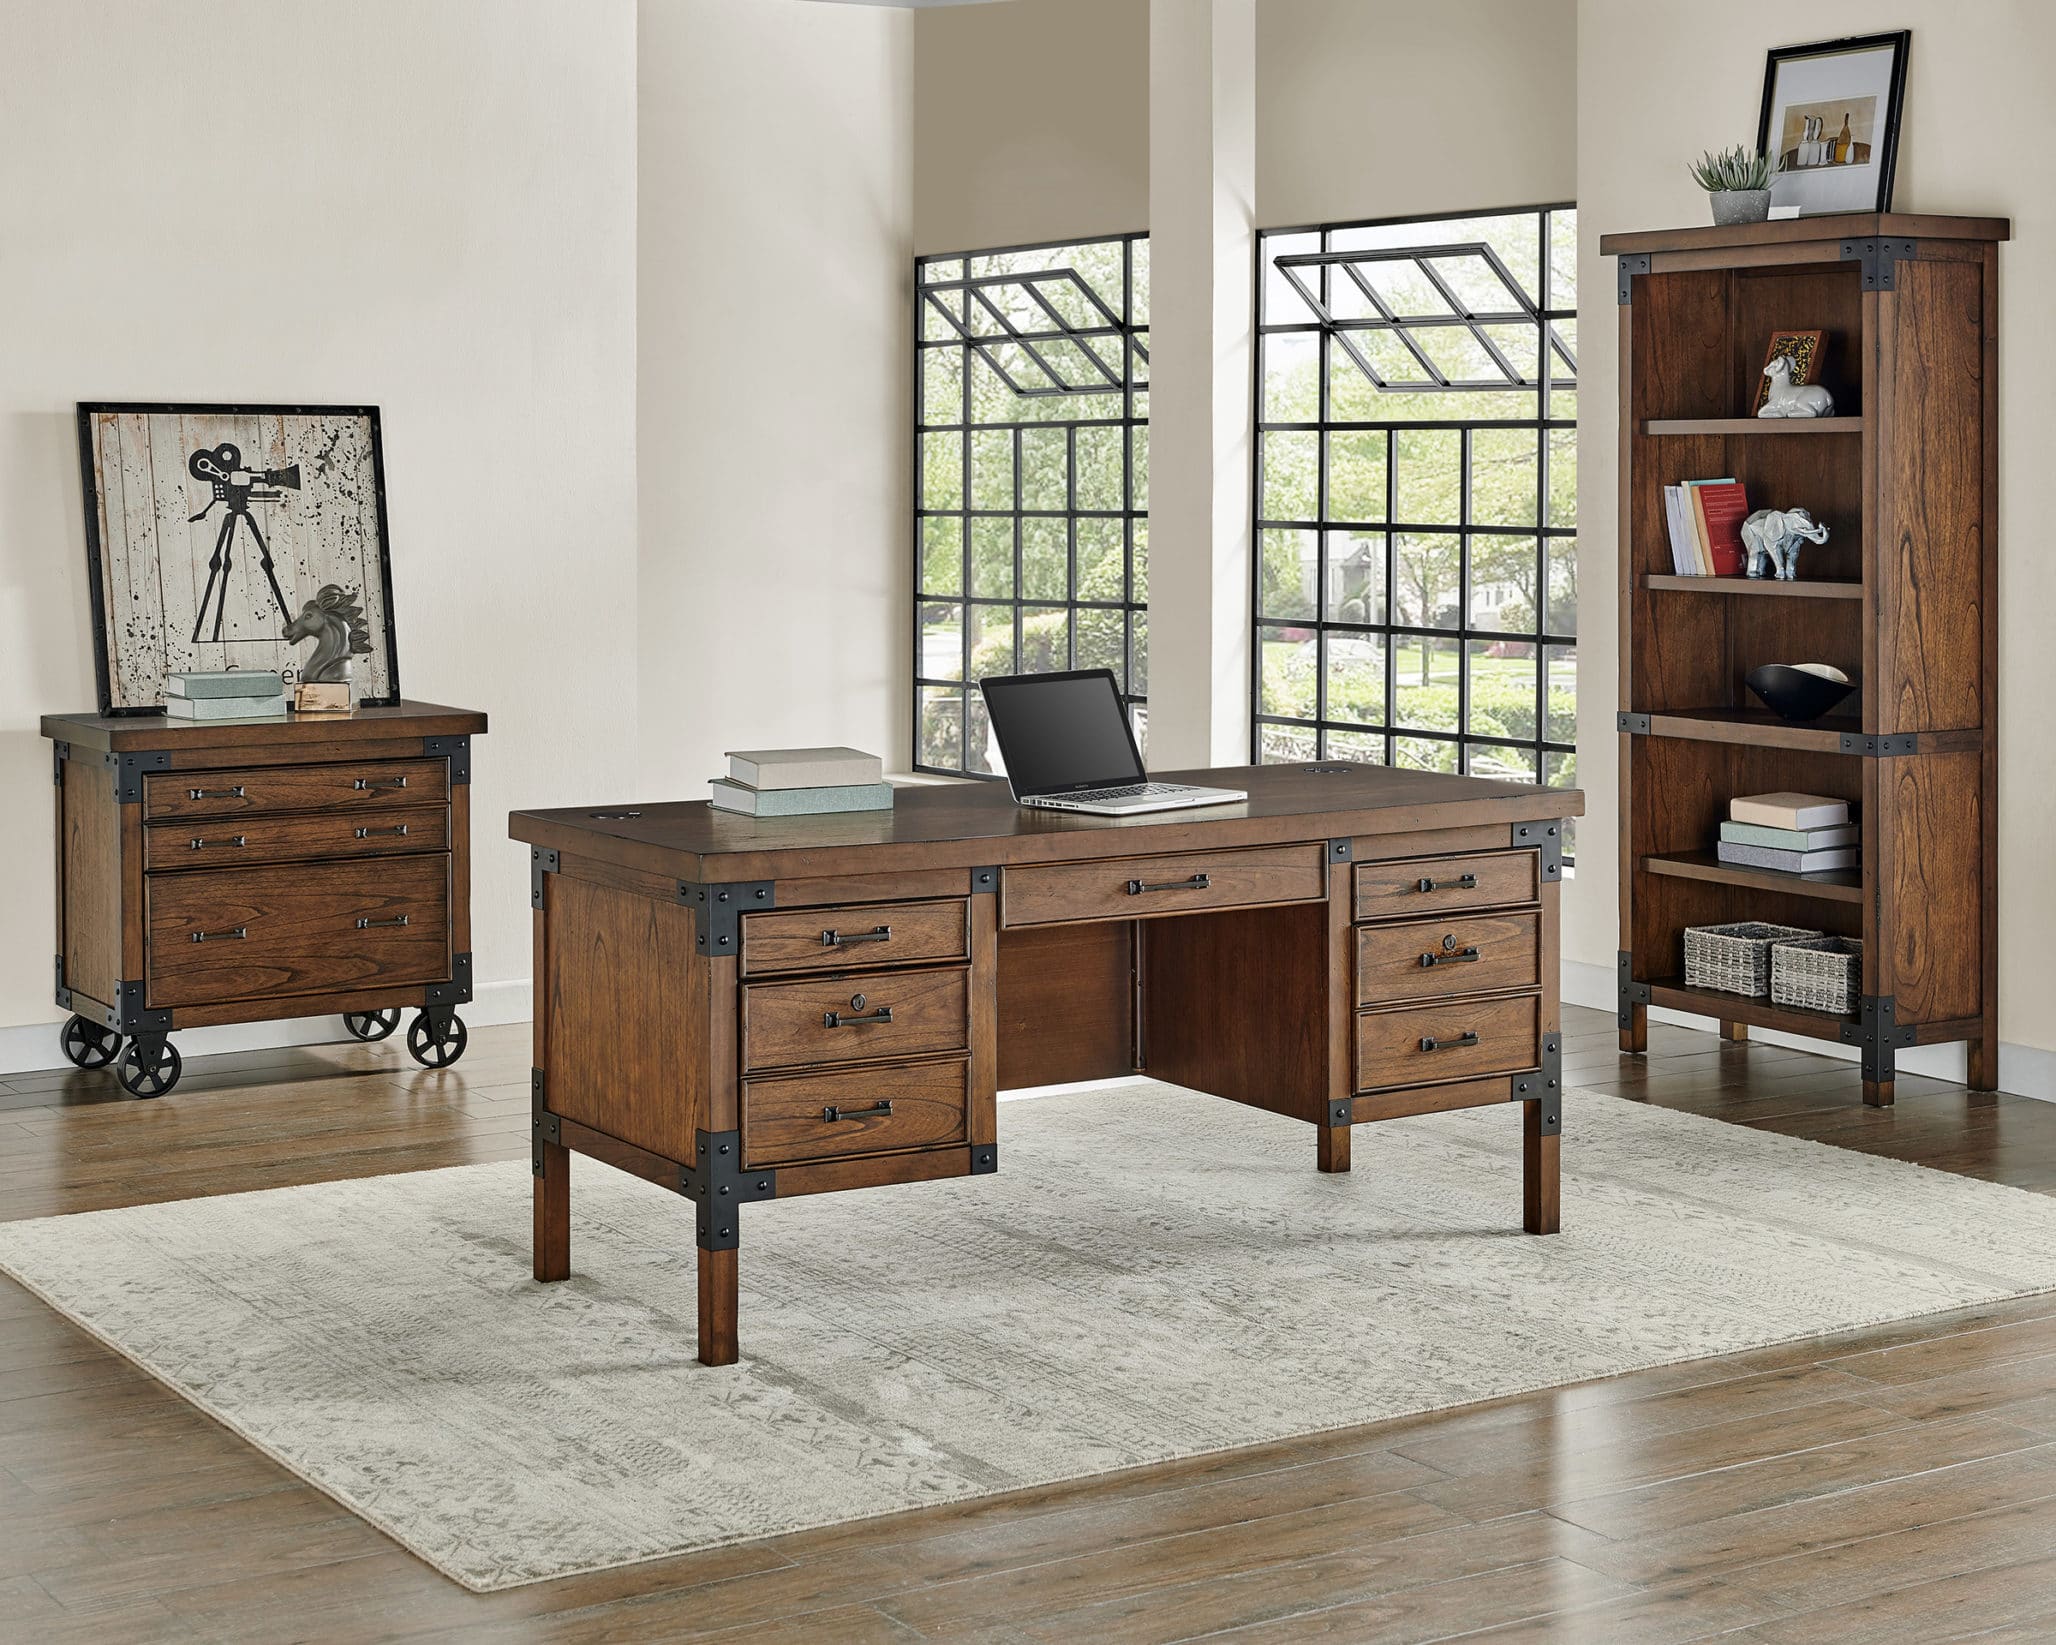 Martin Furniture ADDISON Half Pedestal Desk - FREE SHIPPING